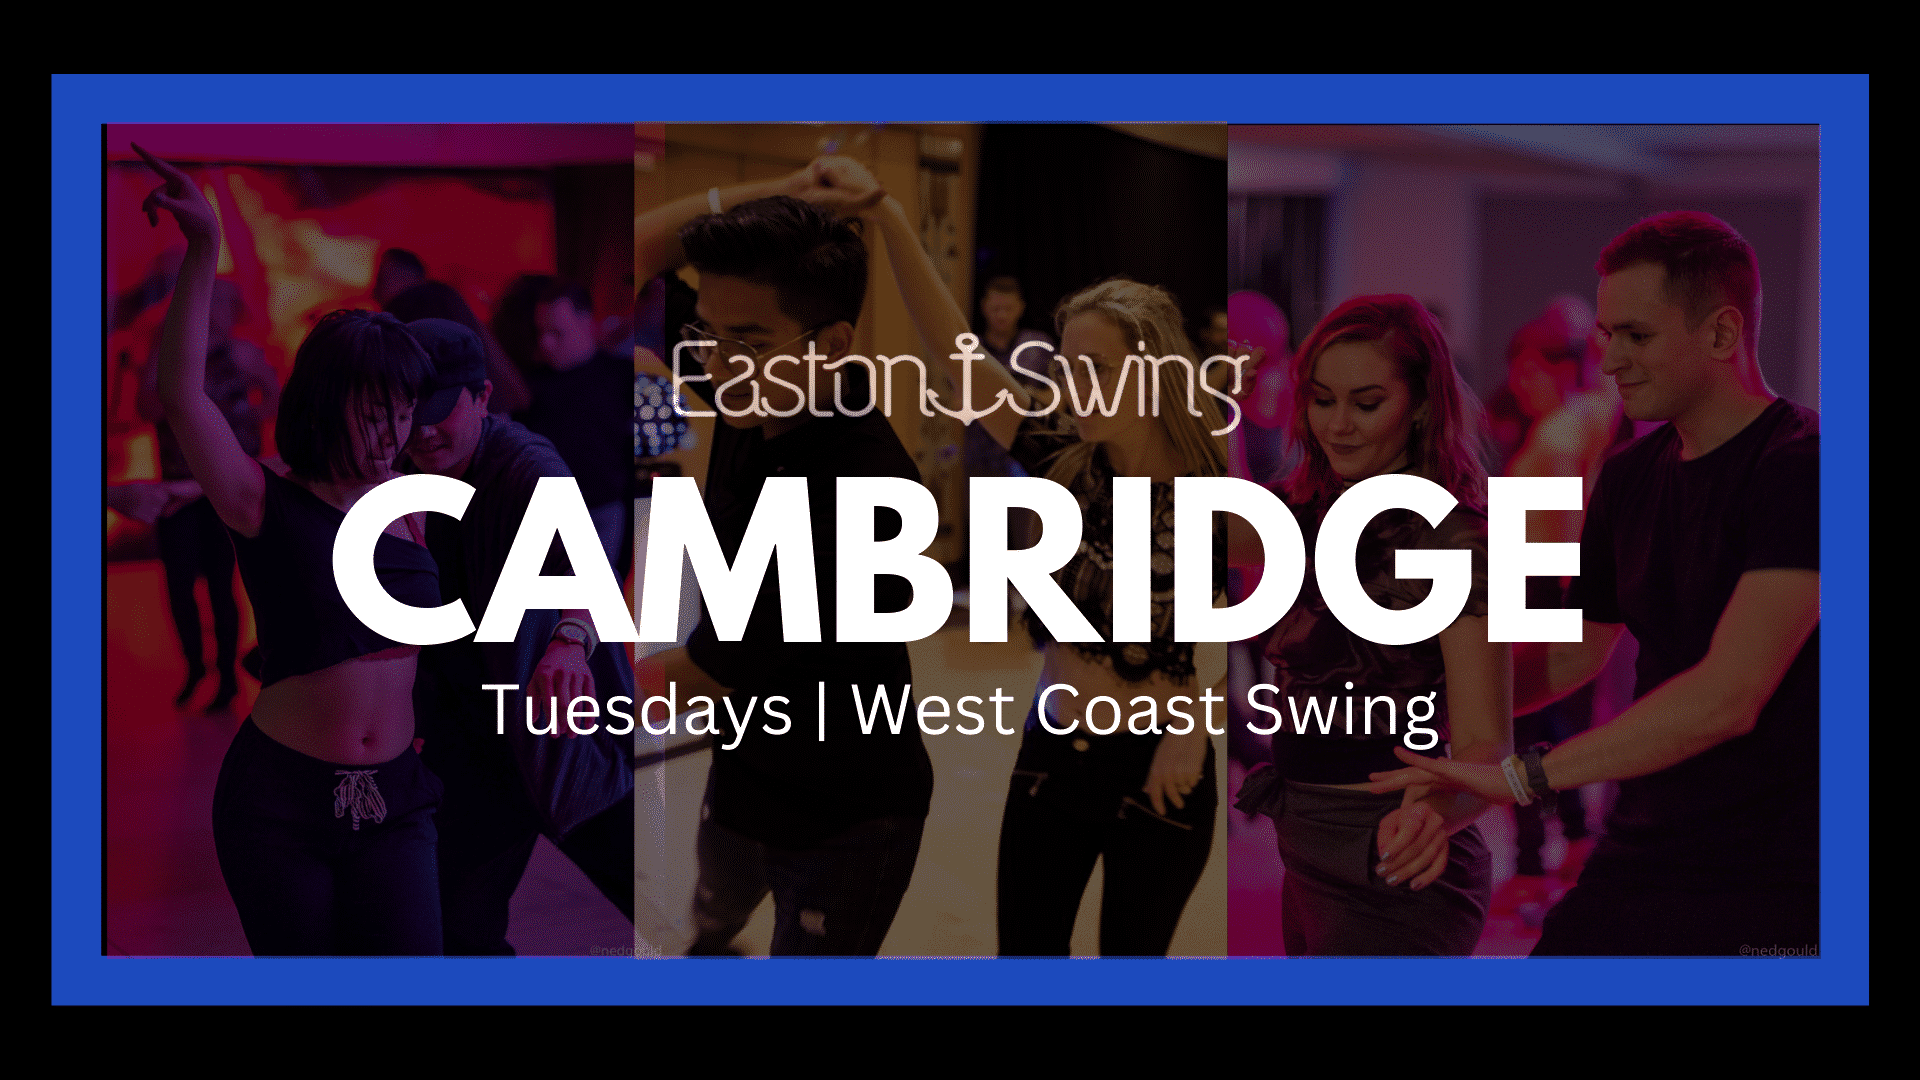 West Coast Swing Cambridge, people enjoying dancing with emboldened white text explaining class details